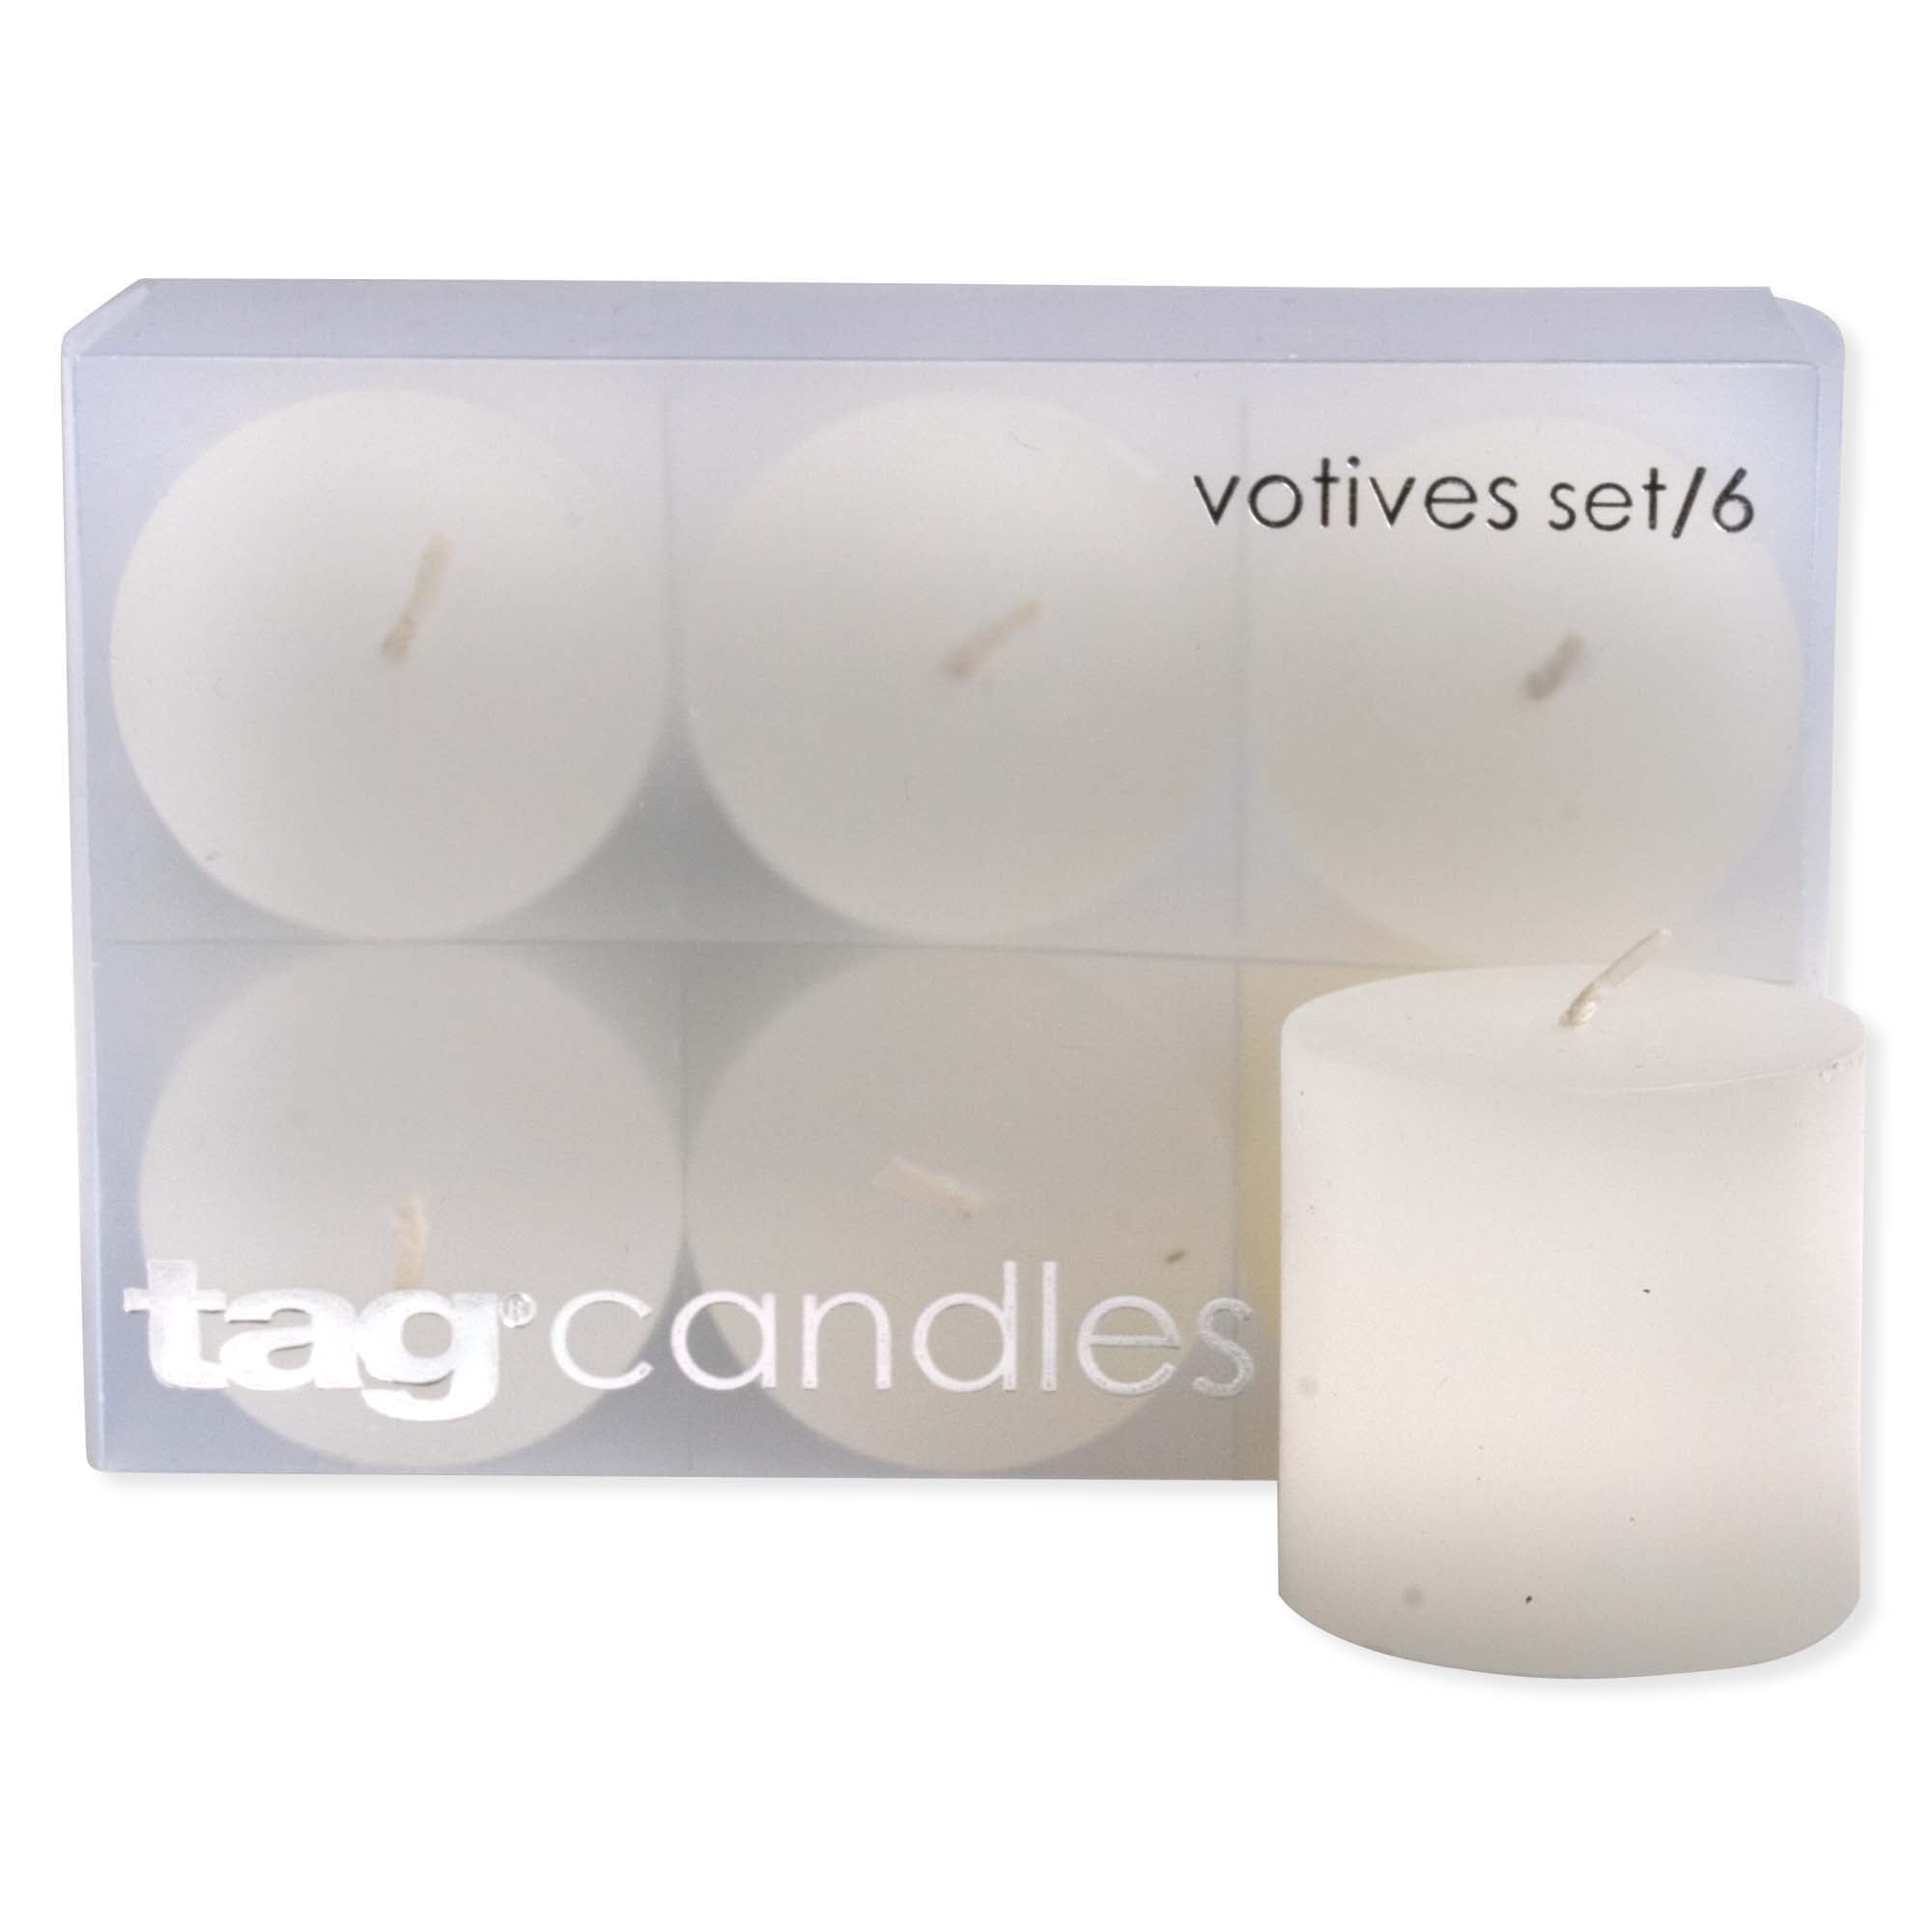 BASIC VOTIVE CANDLES SET- set of 6 votive candles, white 